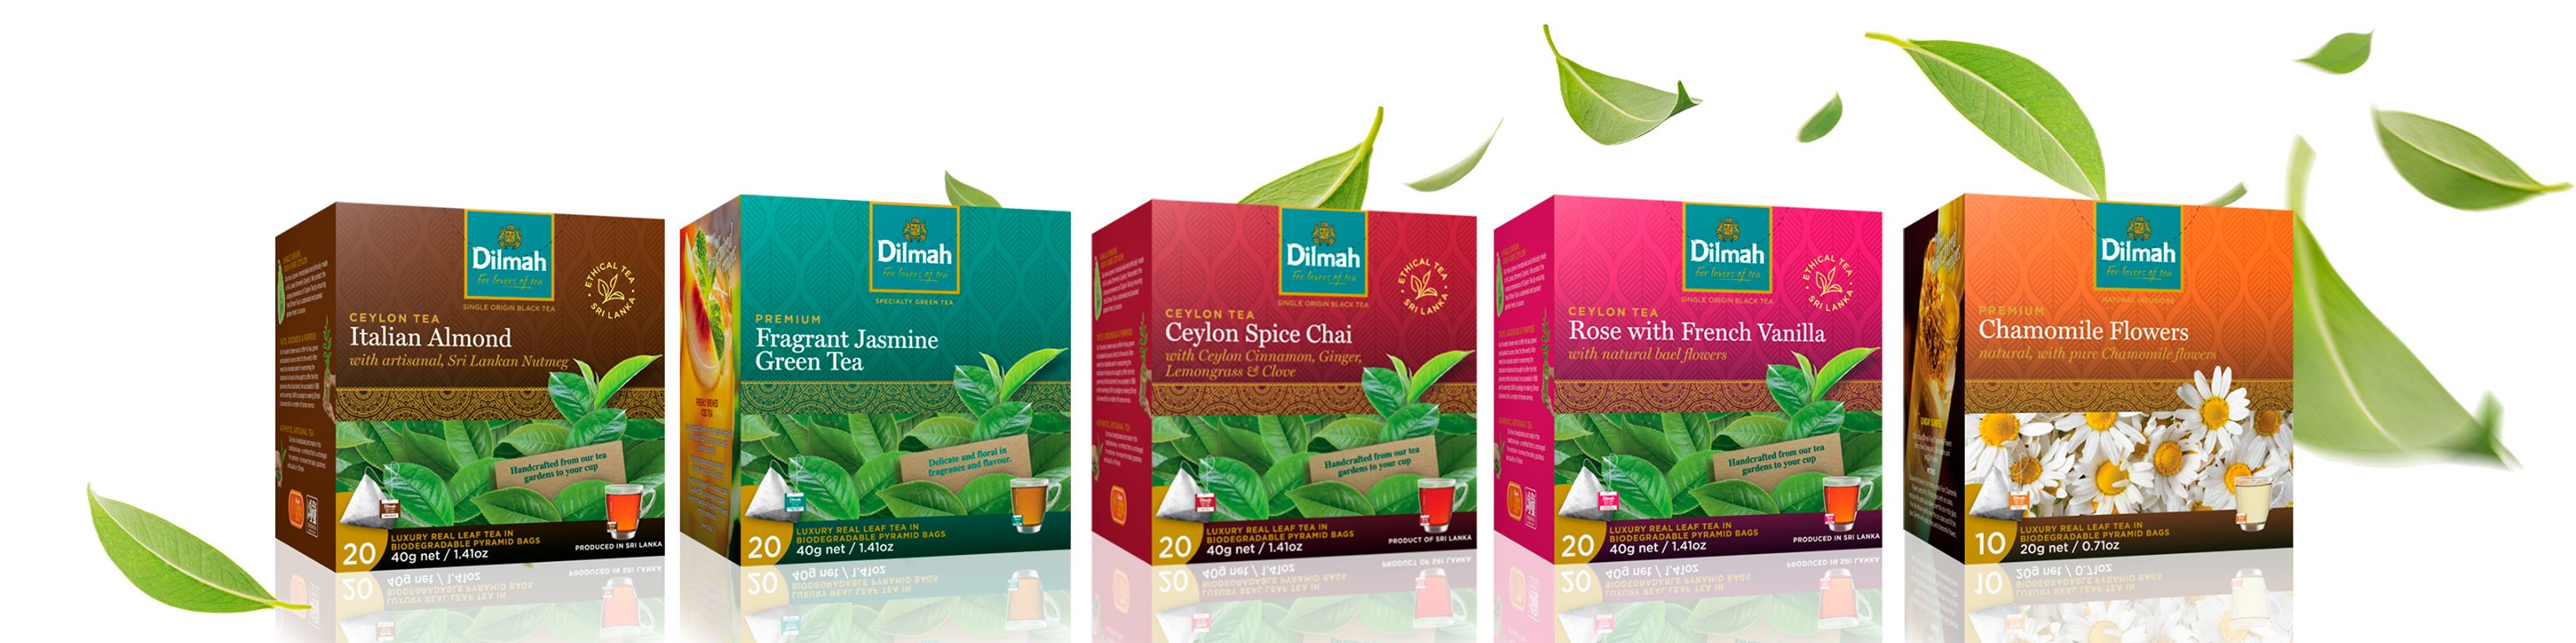 All Dilmah Tea Australia Deals & Promotions